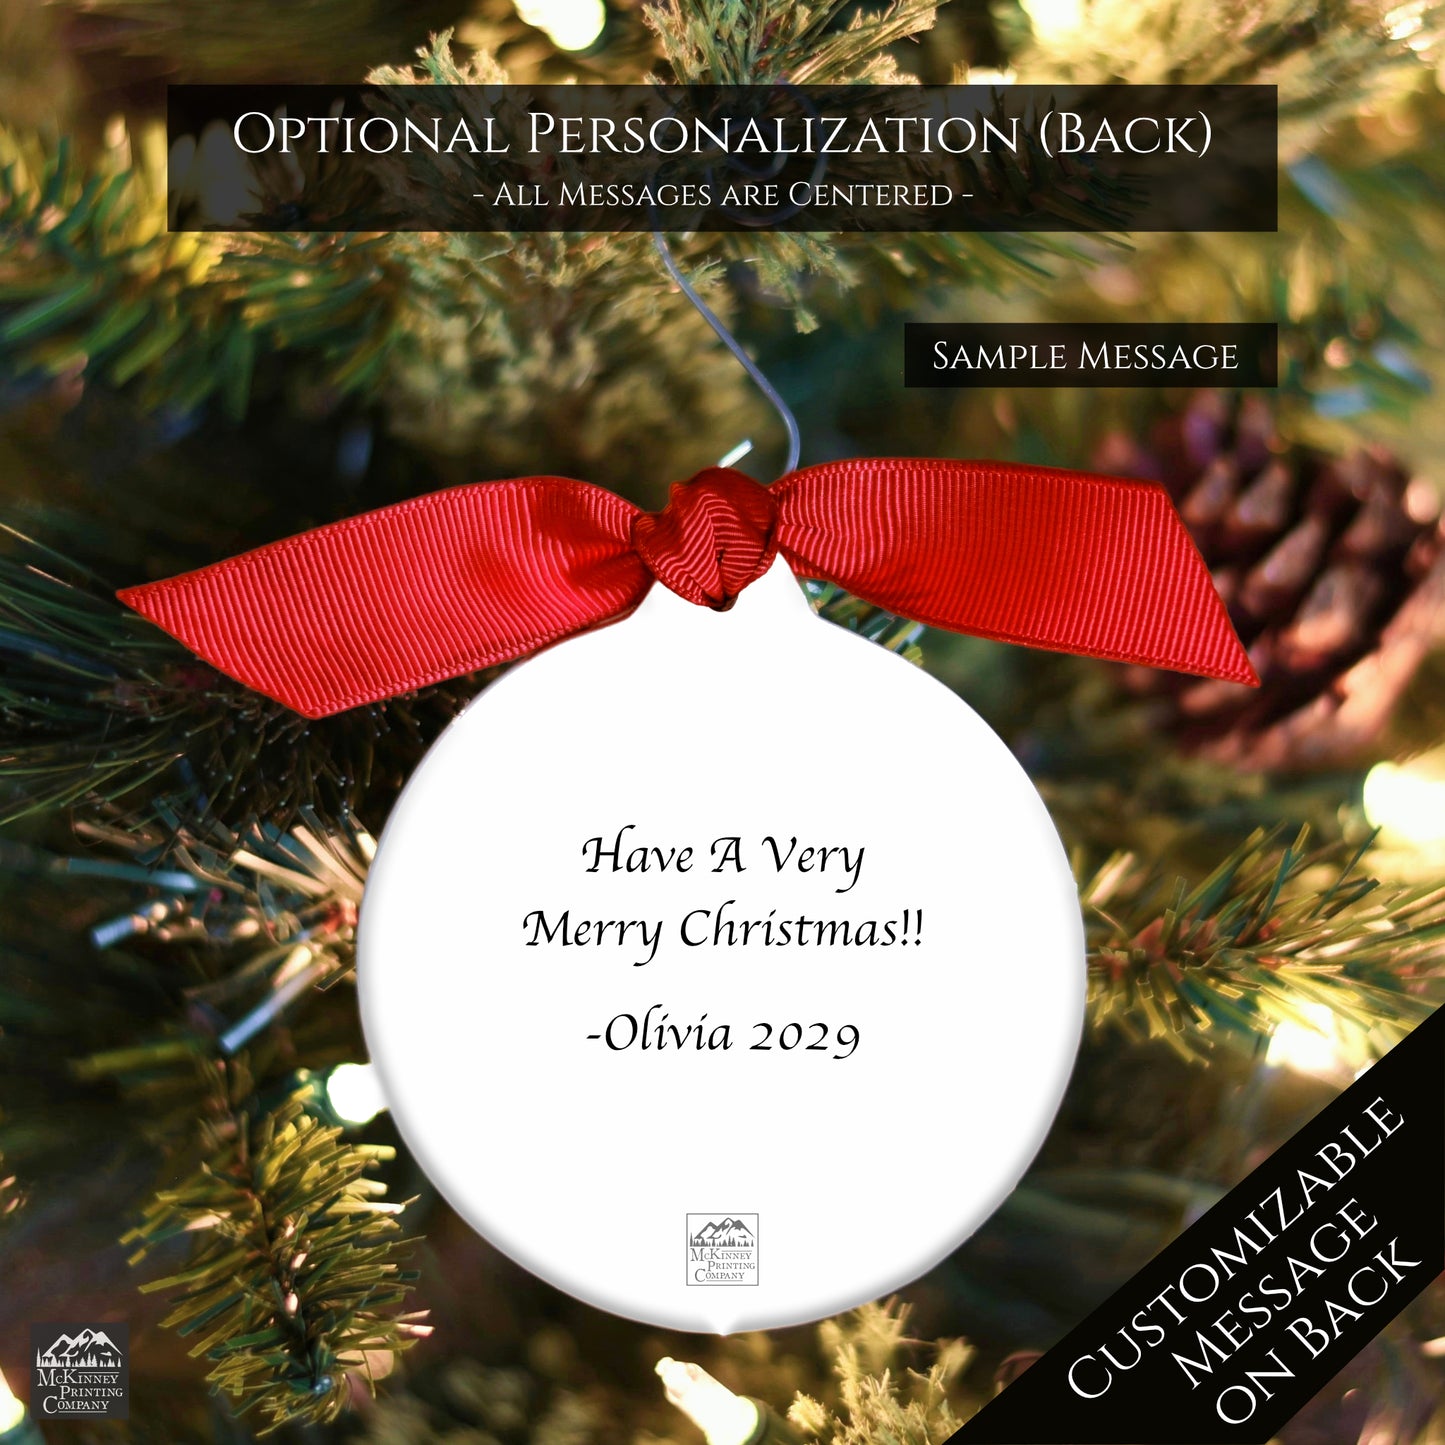 Christmas Sheet Music - Ornaments, Lyrics, Song, I Saw Three Ships